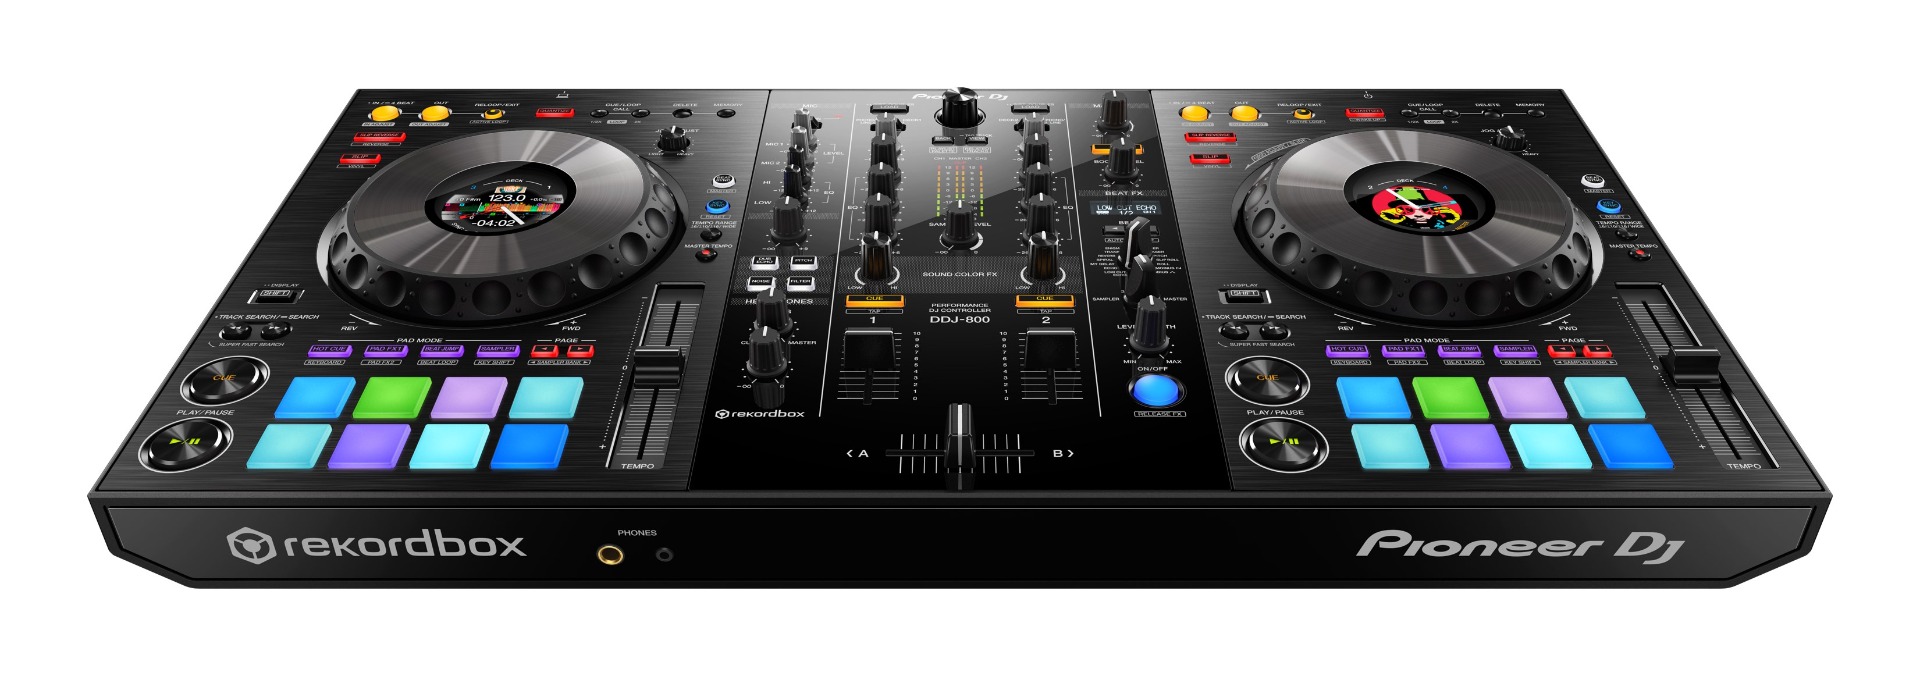 Pioneer DDJ-800 - 2-Channel DJ Controller for rekordbox dj